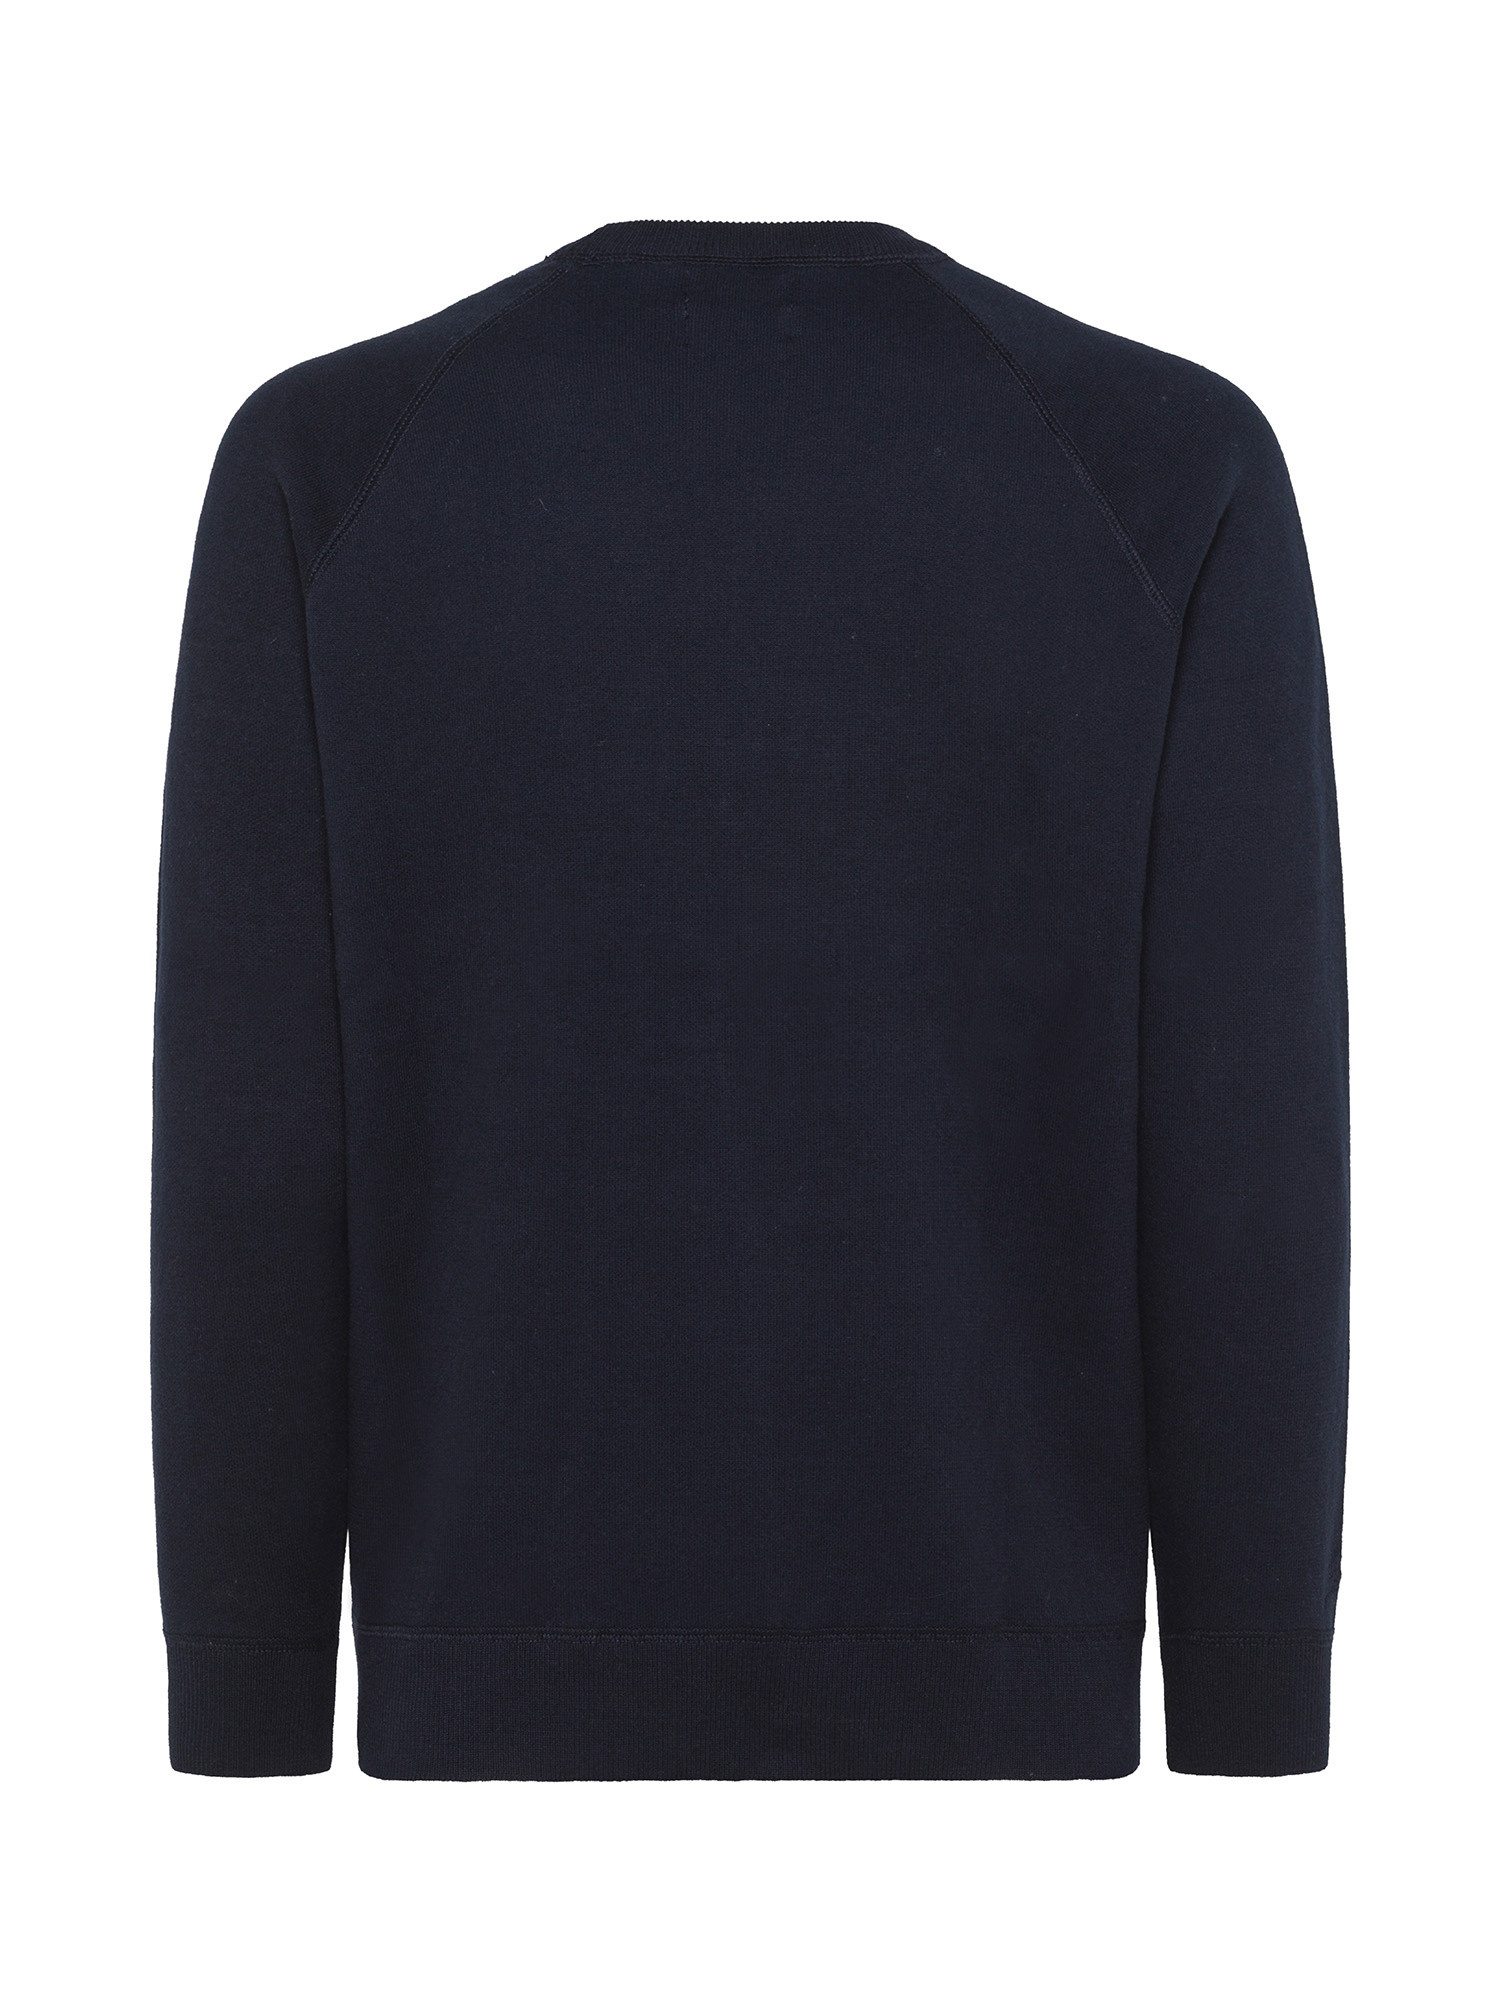 Superdry - Sweatshirt with writing, Dark Blue, large image number 1